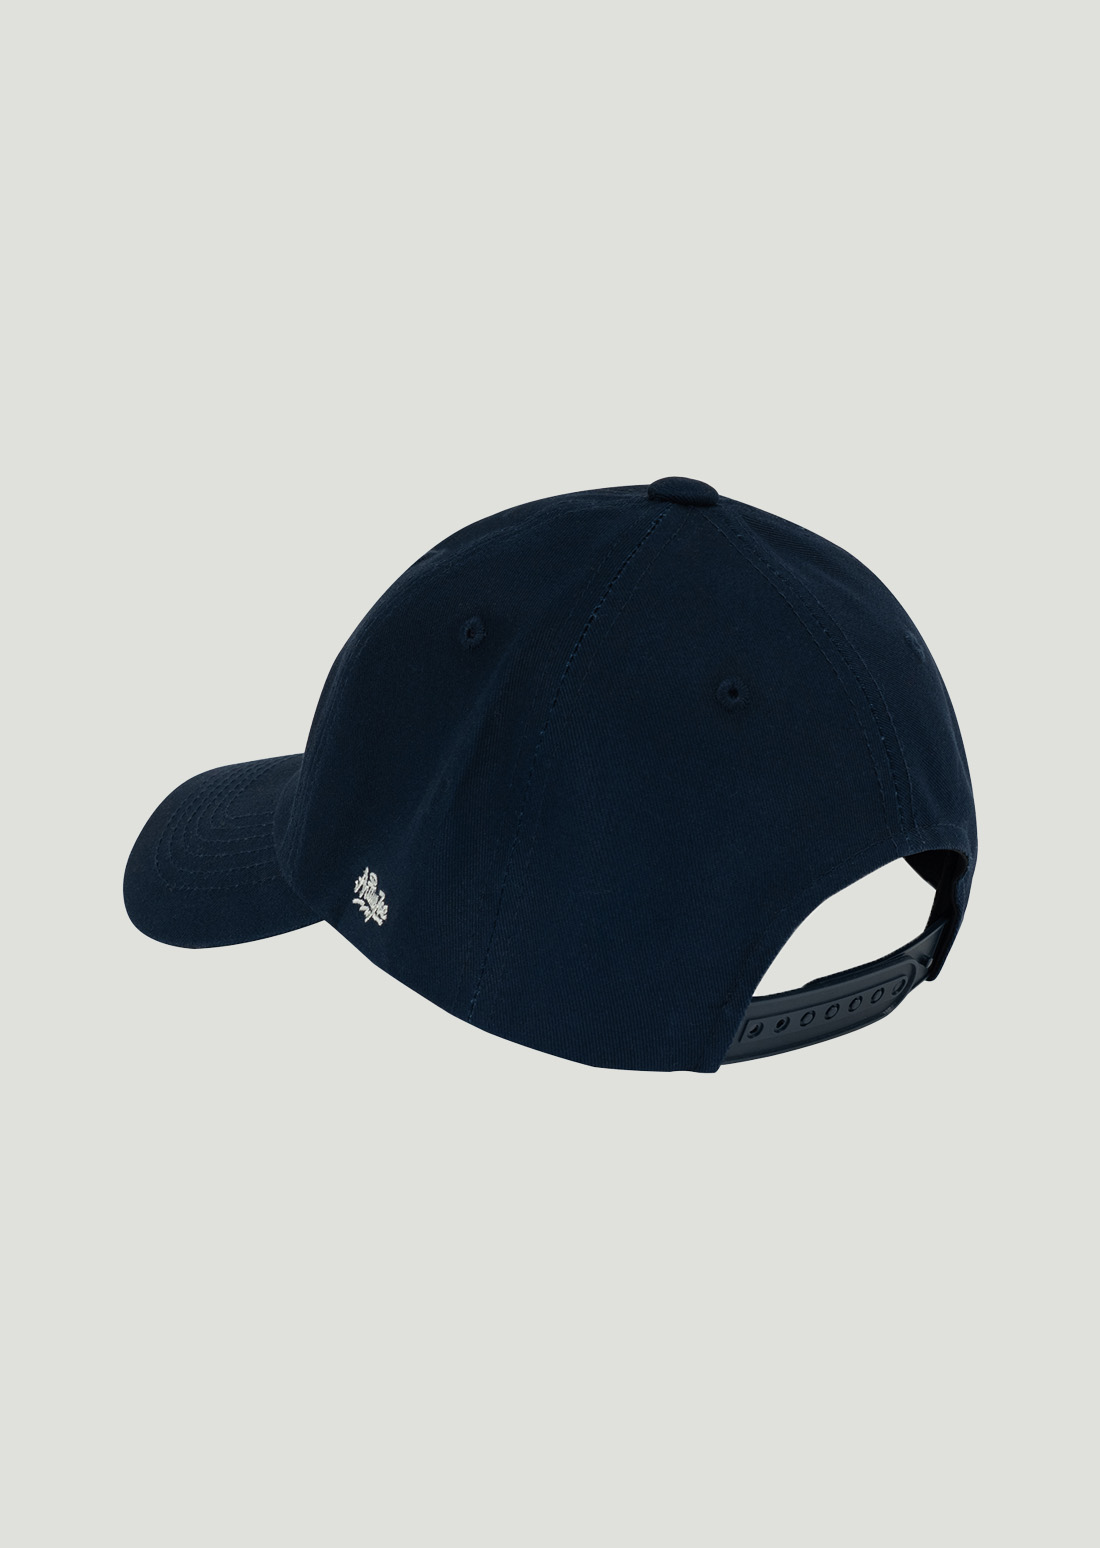 TOGETHER ball cap(Navy) x ARTIME JOE